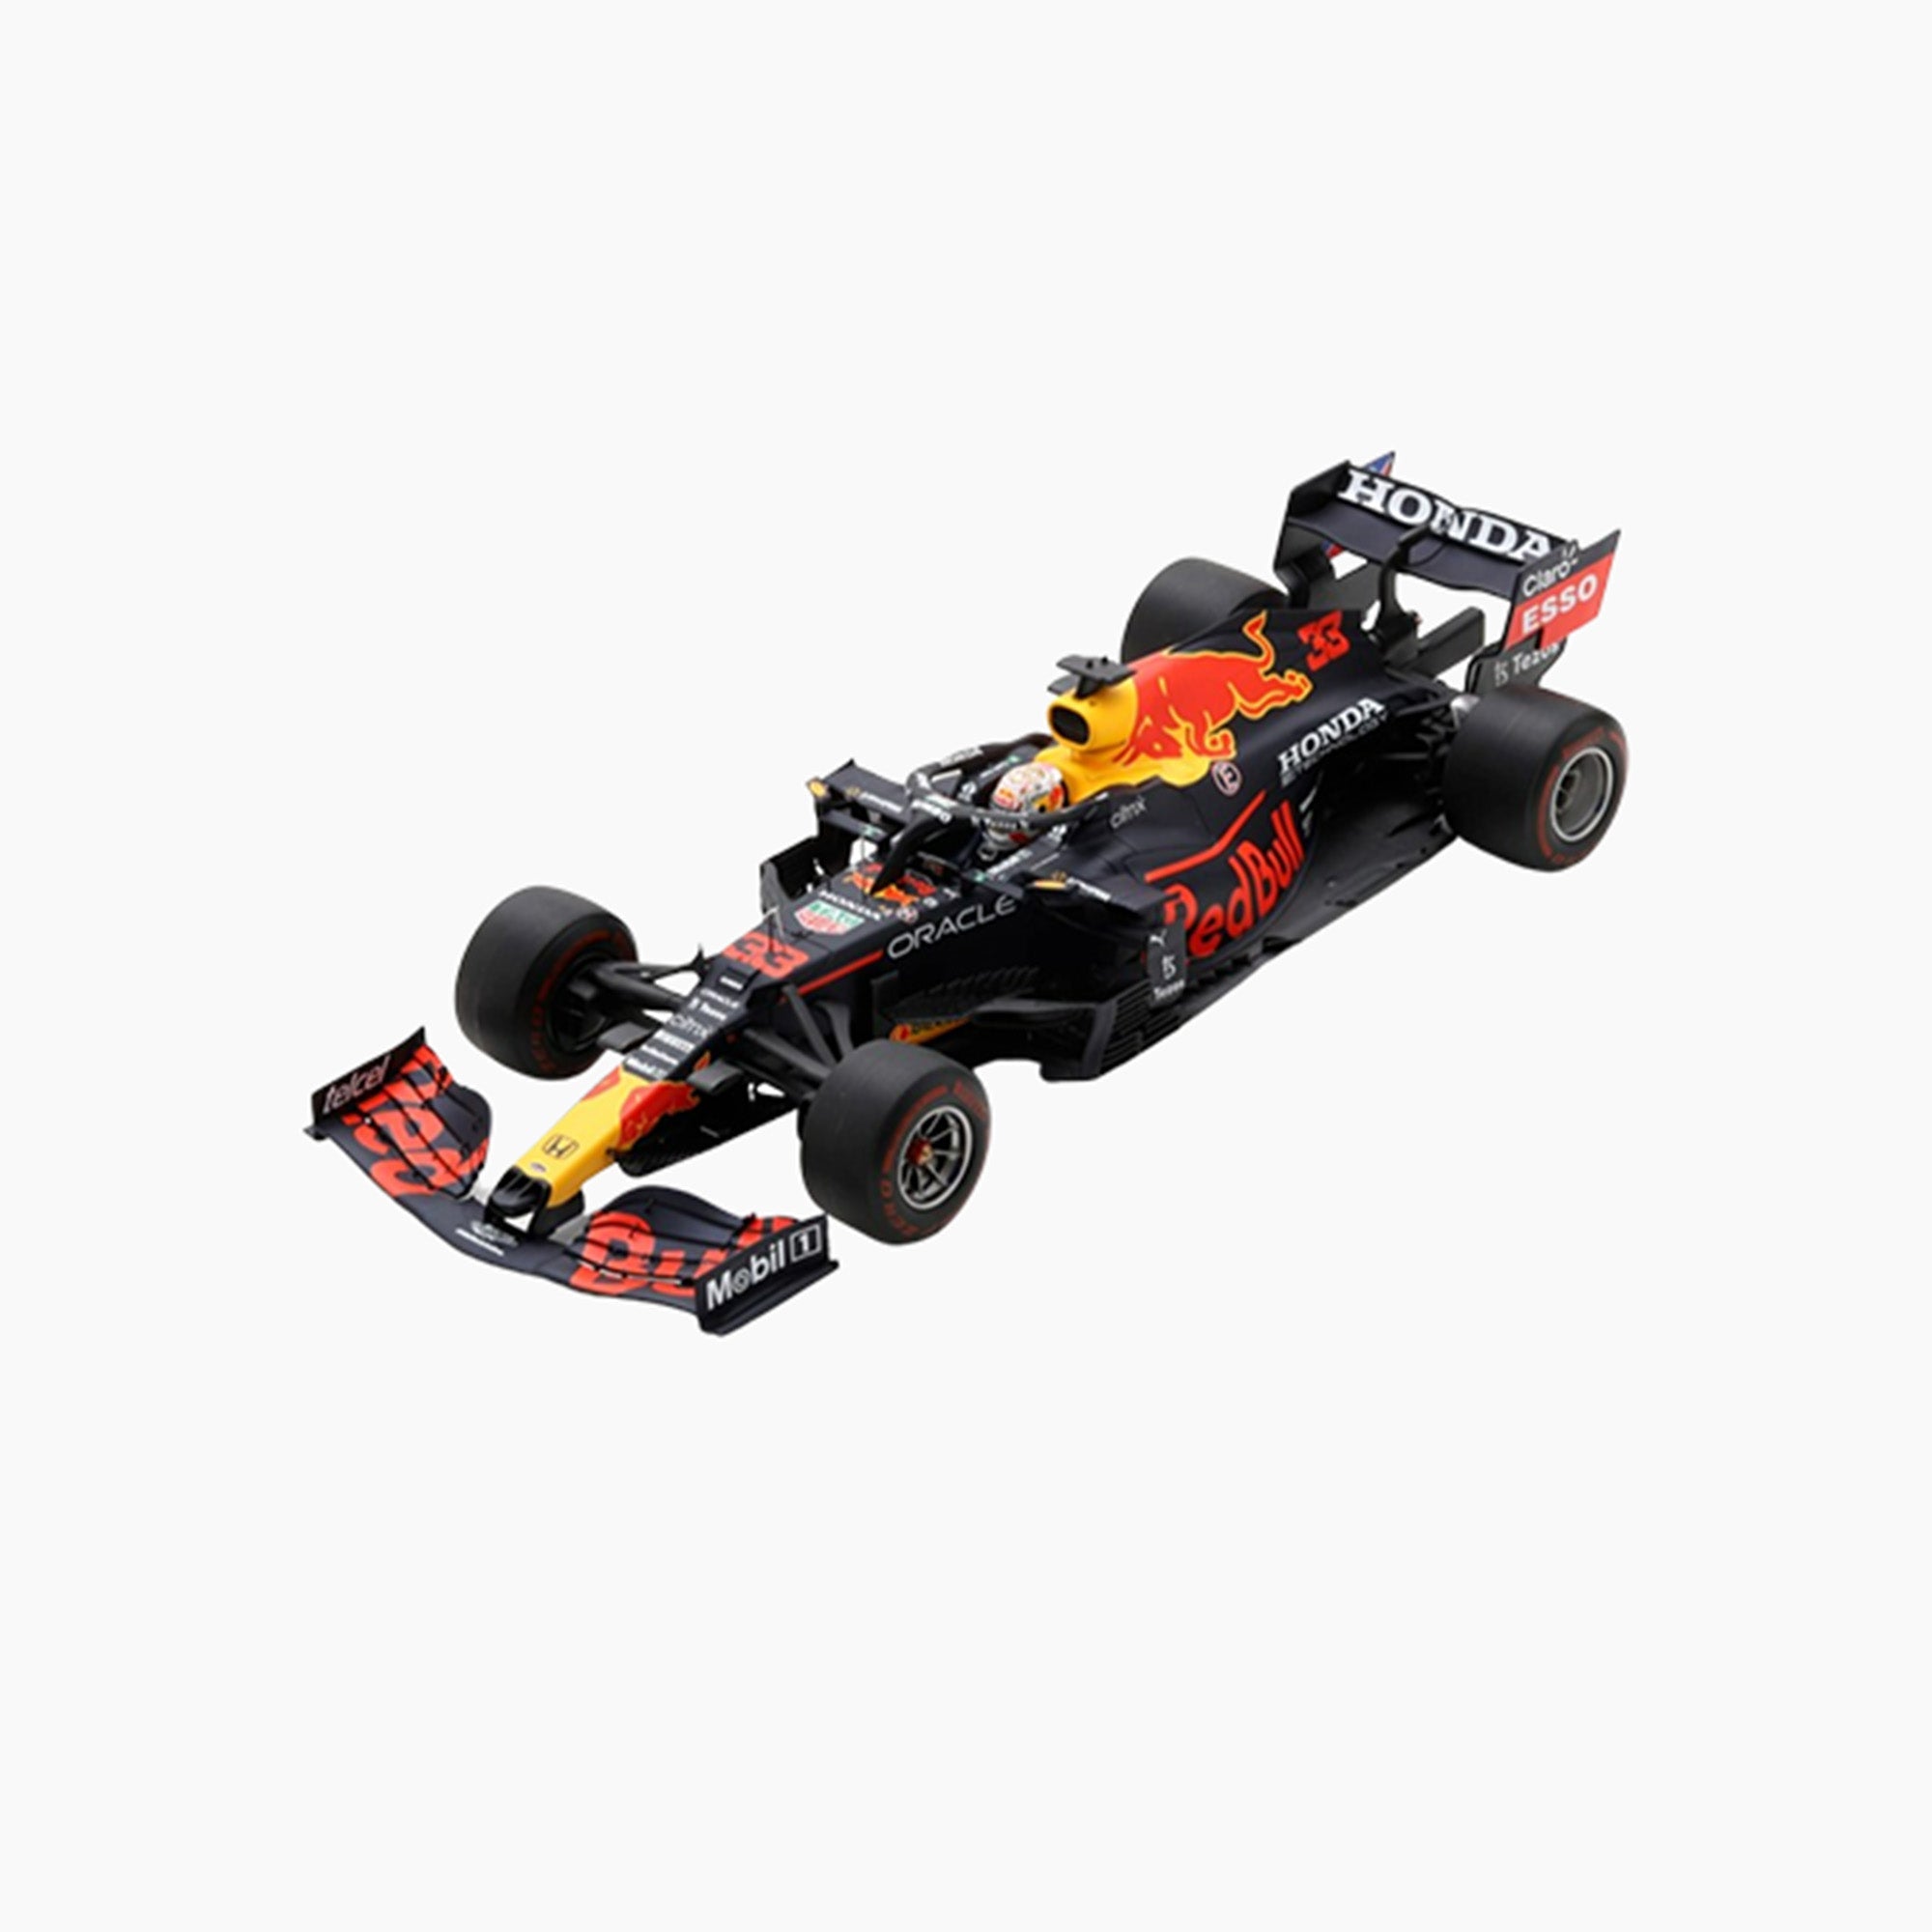 Red Bull Racing Honda RB16B - Red Bull Racing - Winner Abu Dhabi Gp 2021 | 1:18 Scale Model-1:18 Scale Model-Spark Models-gpx-store